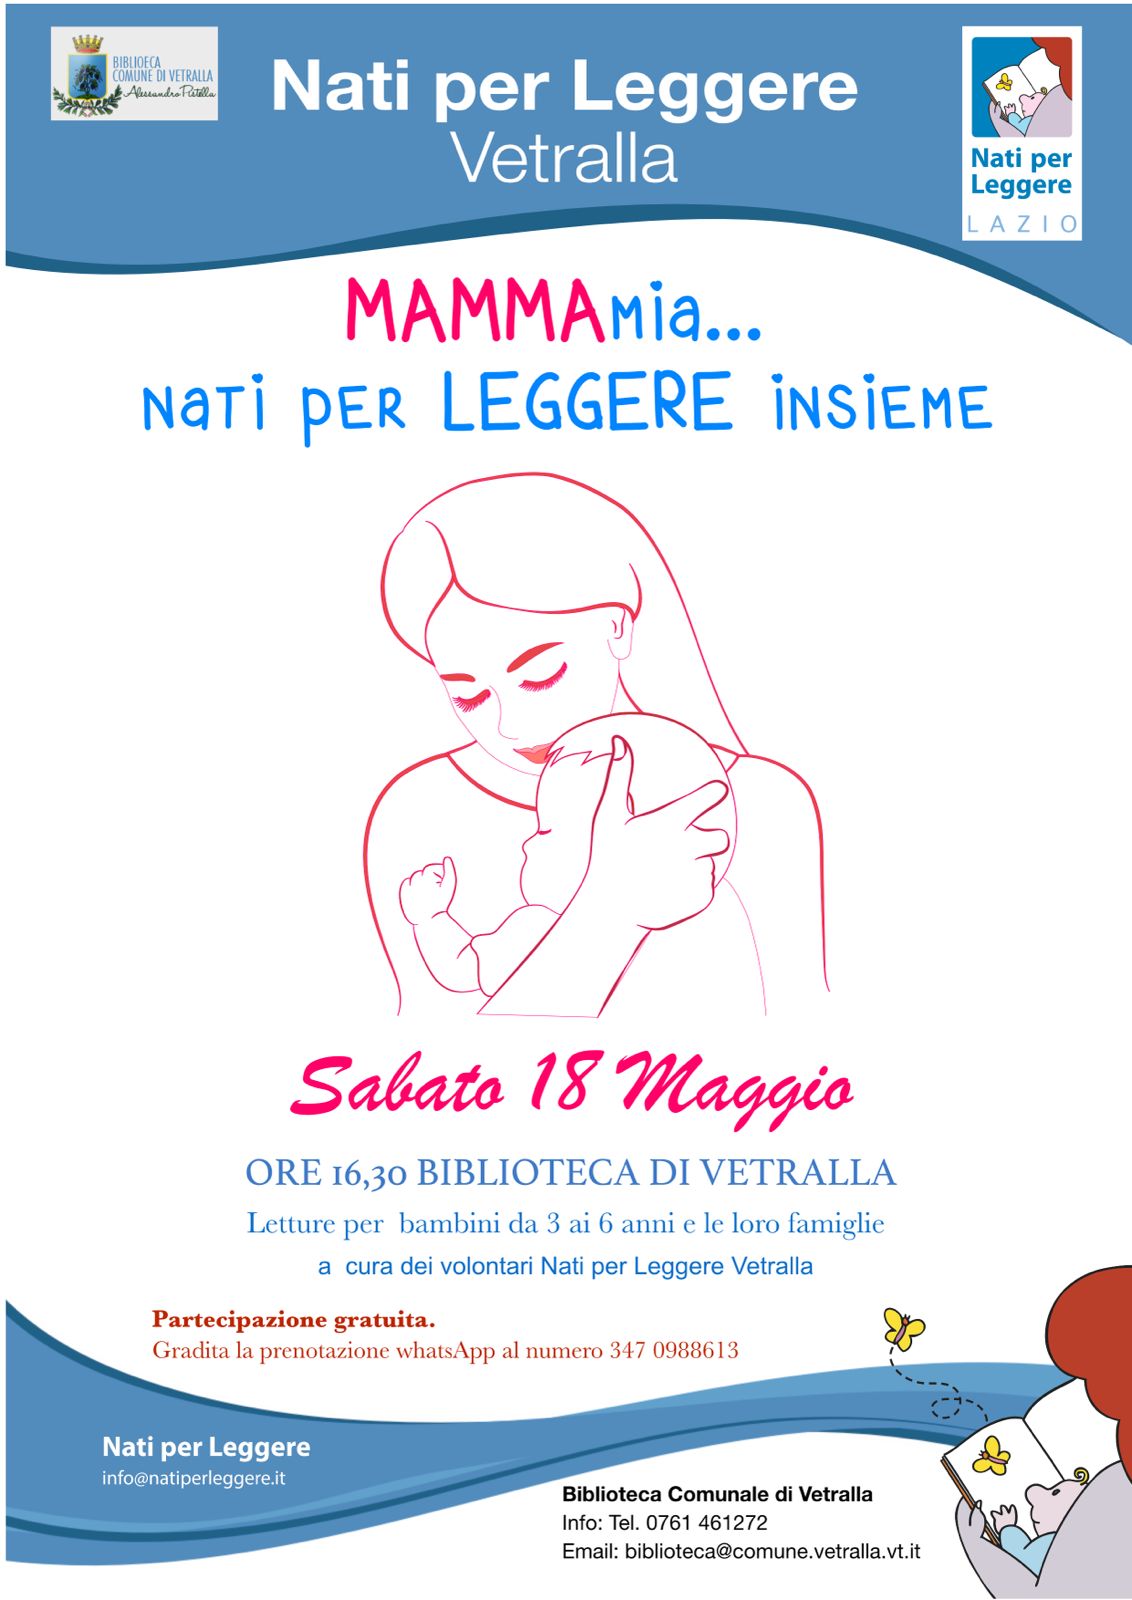 "MAMMAmia…nati per LEGGERE insieme"